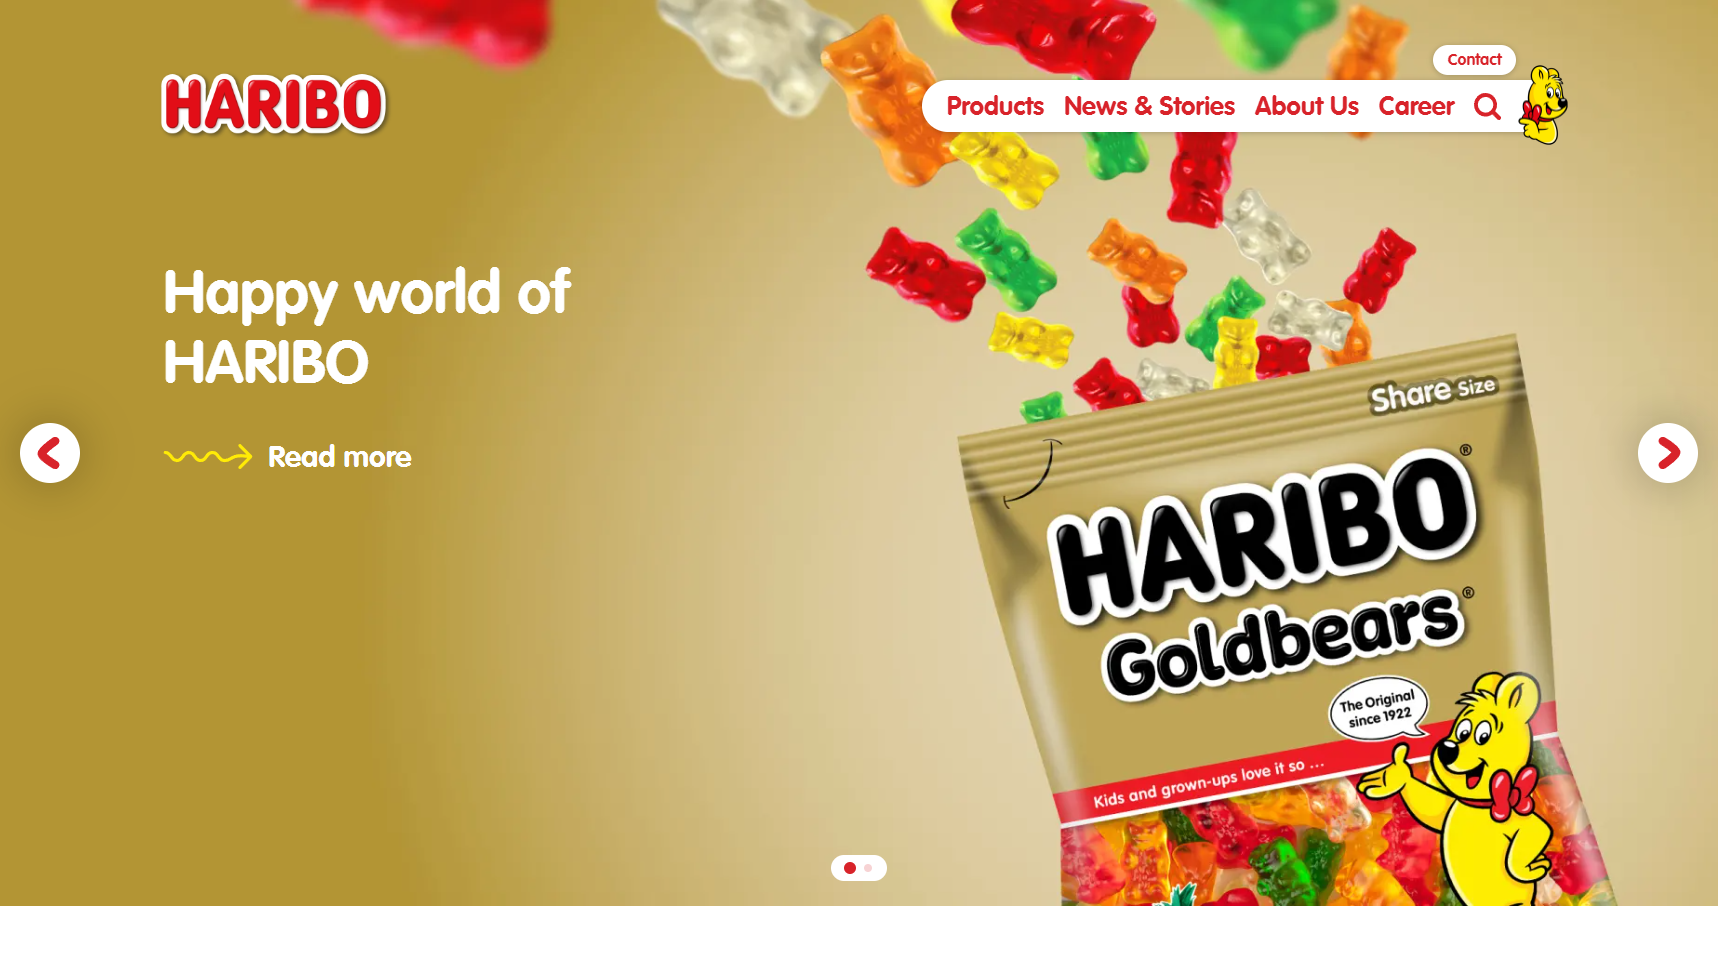 HARIBO - Candy Manufacturer